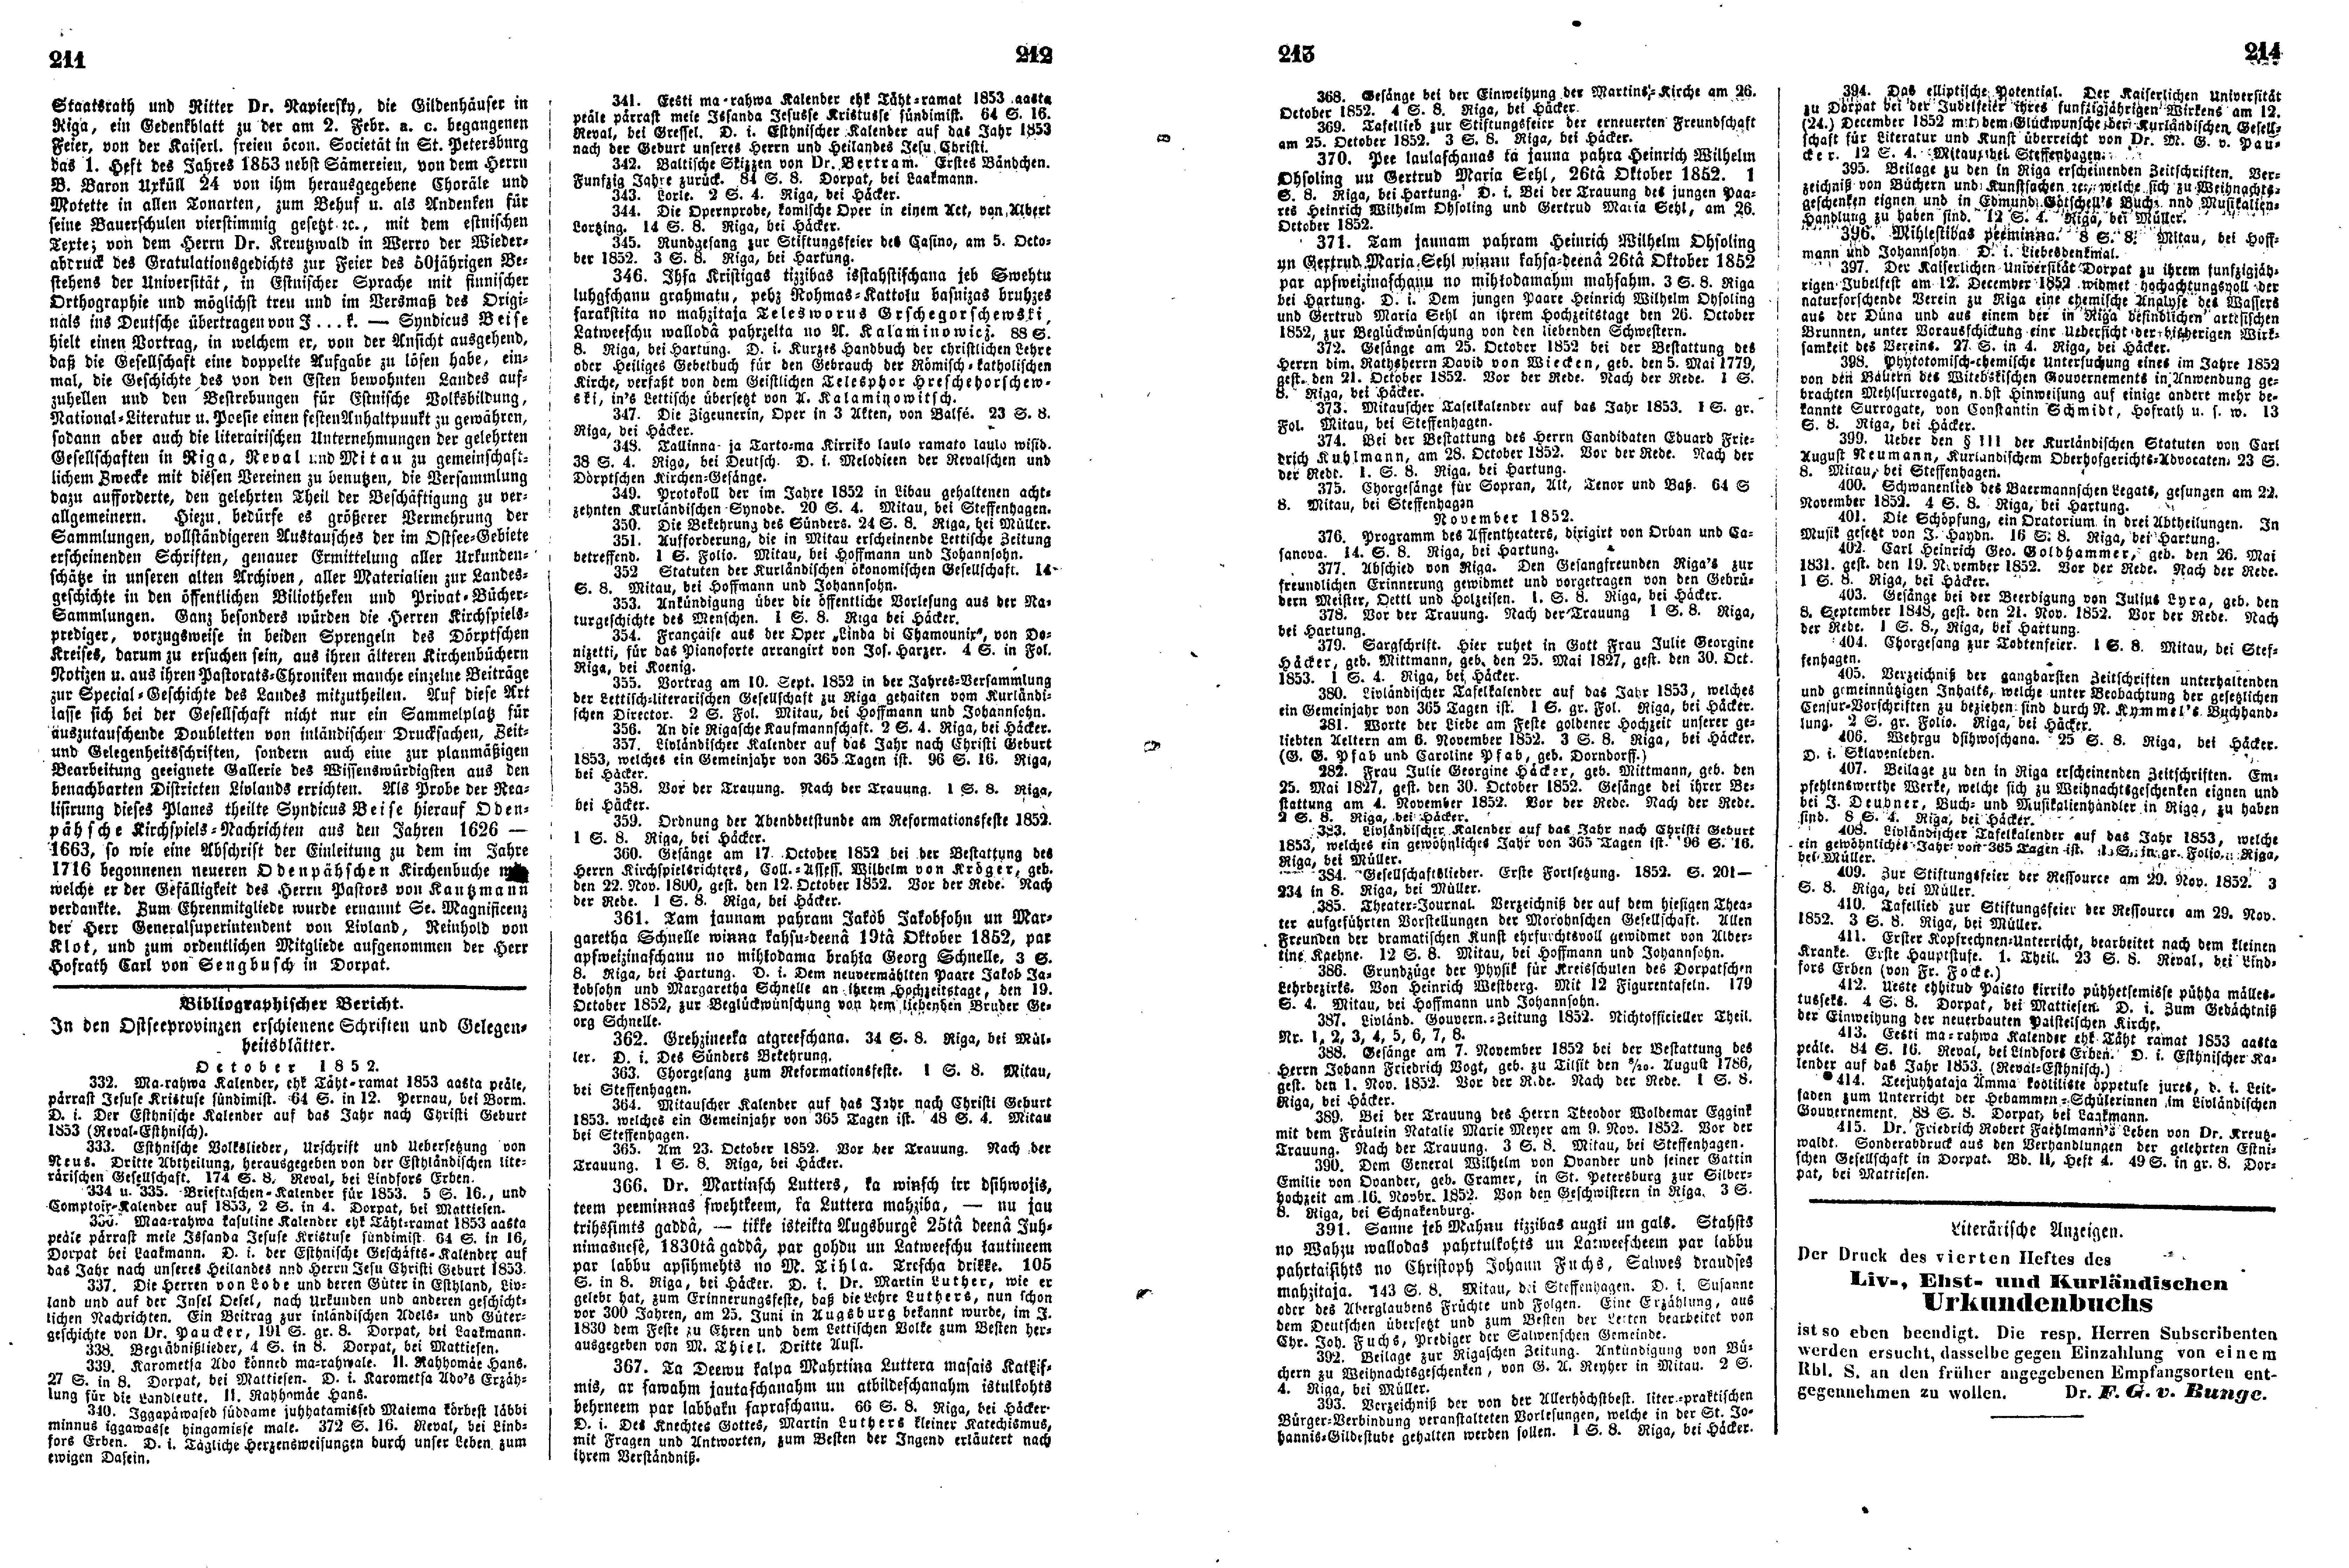 Das Inland [18] (1853) | 63. (211-214) Main body of text